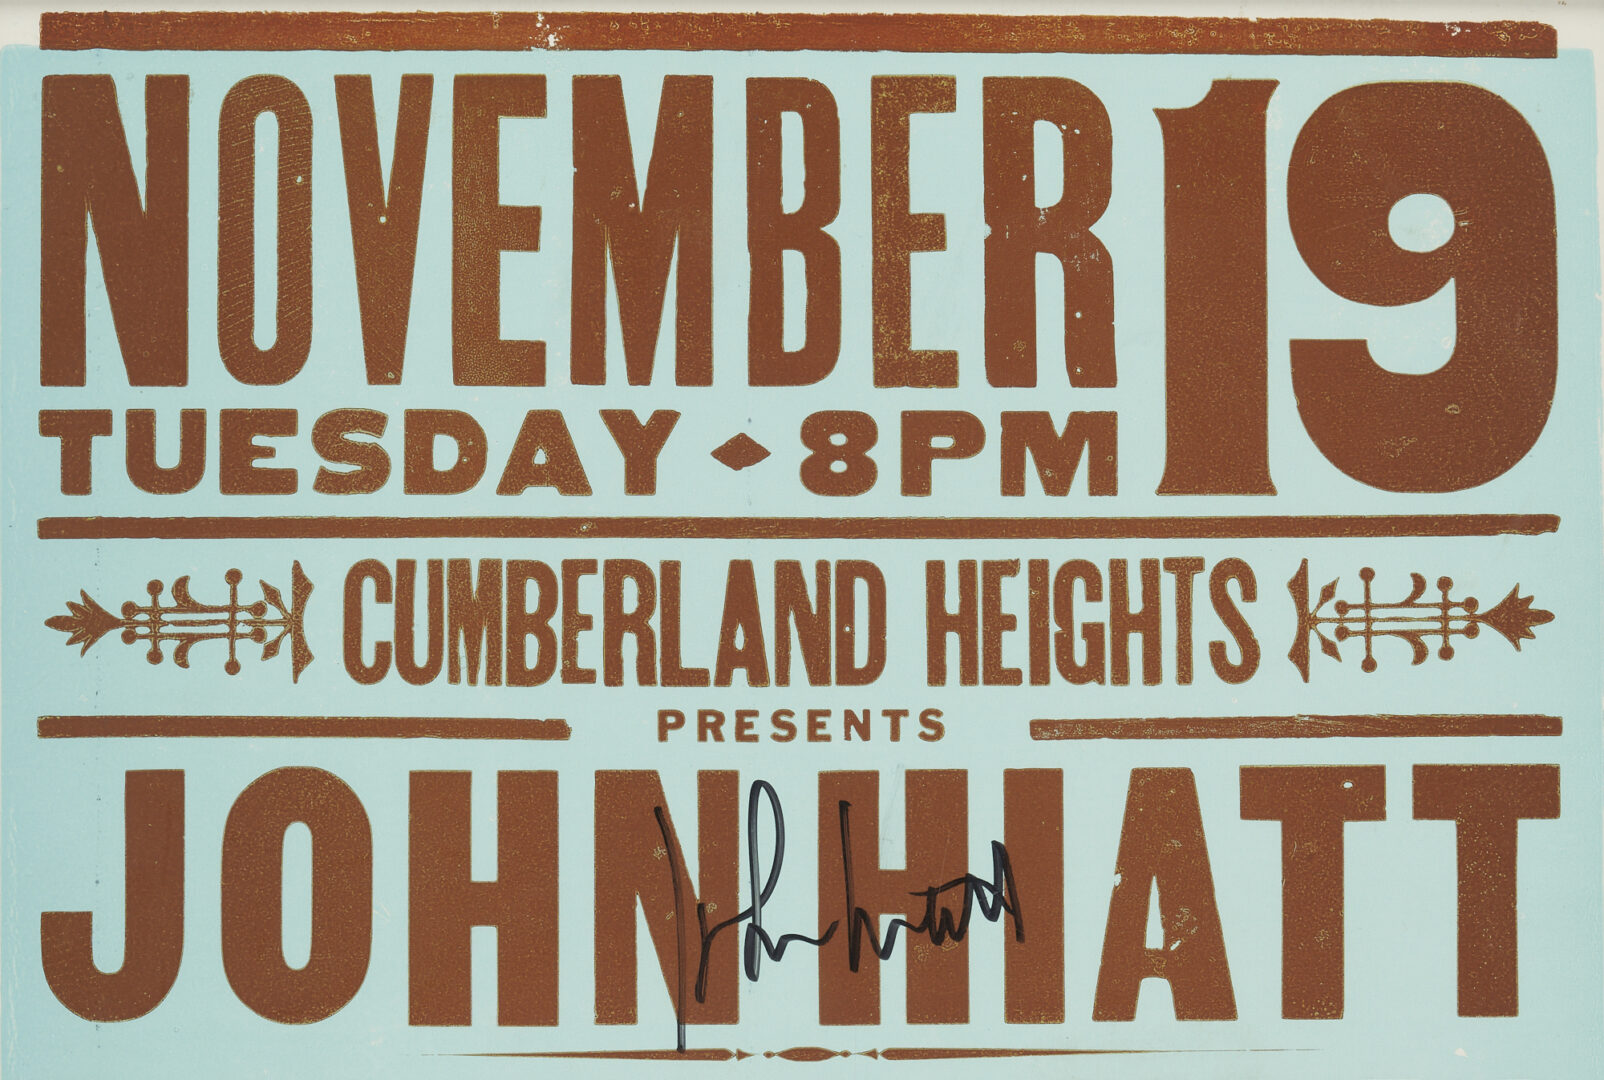 Lot 617: 2 Musician Autographed Hatch Show Print Posters